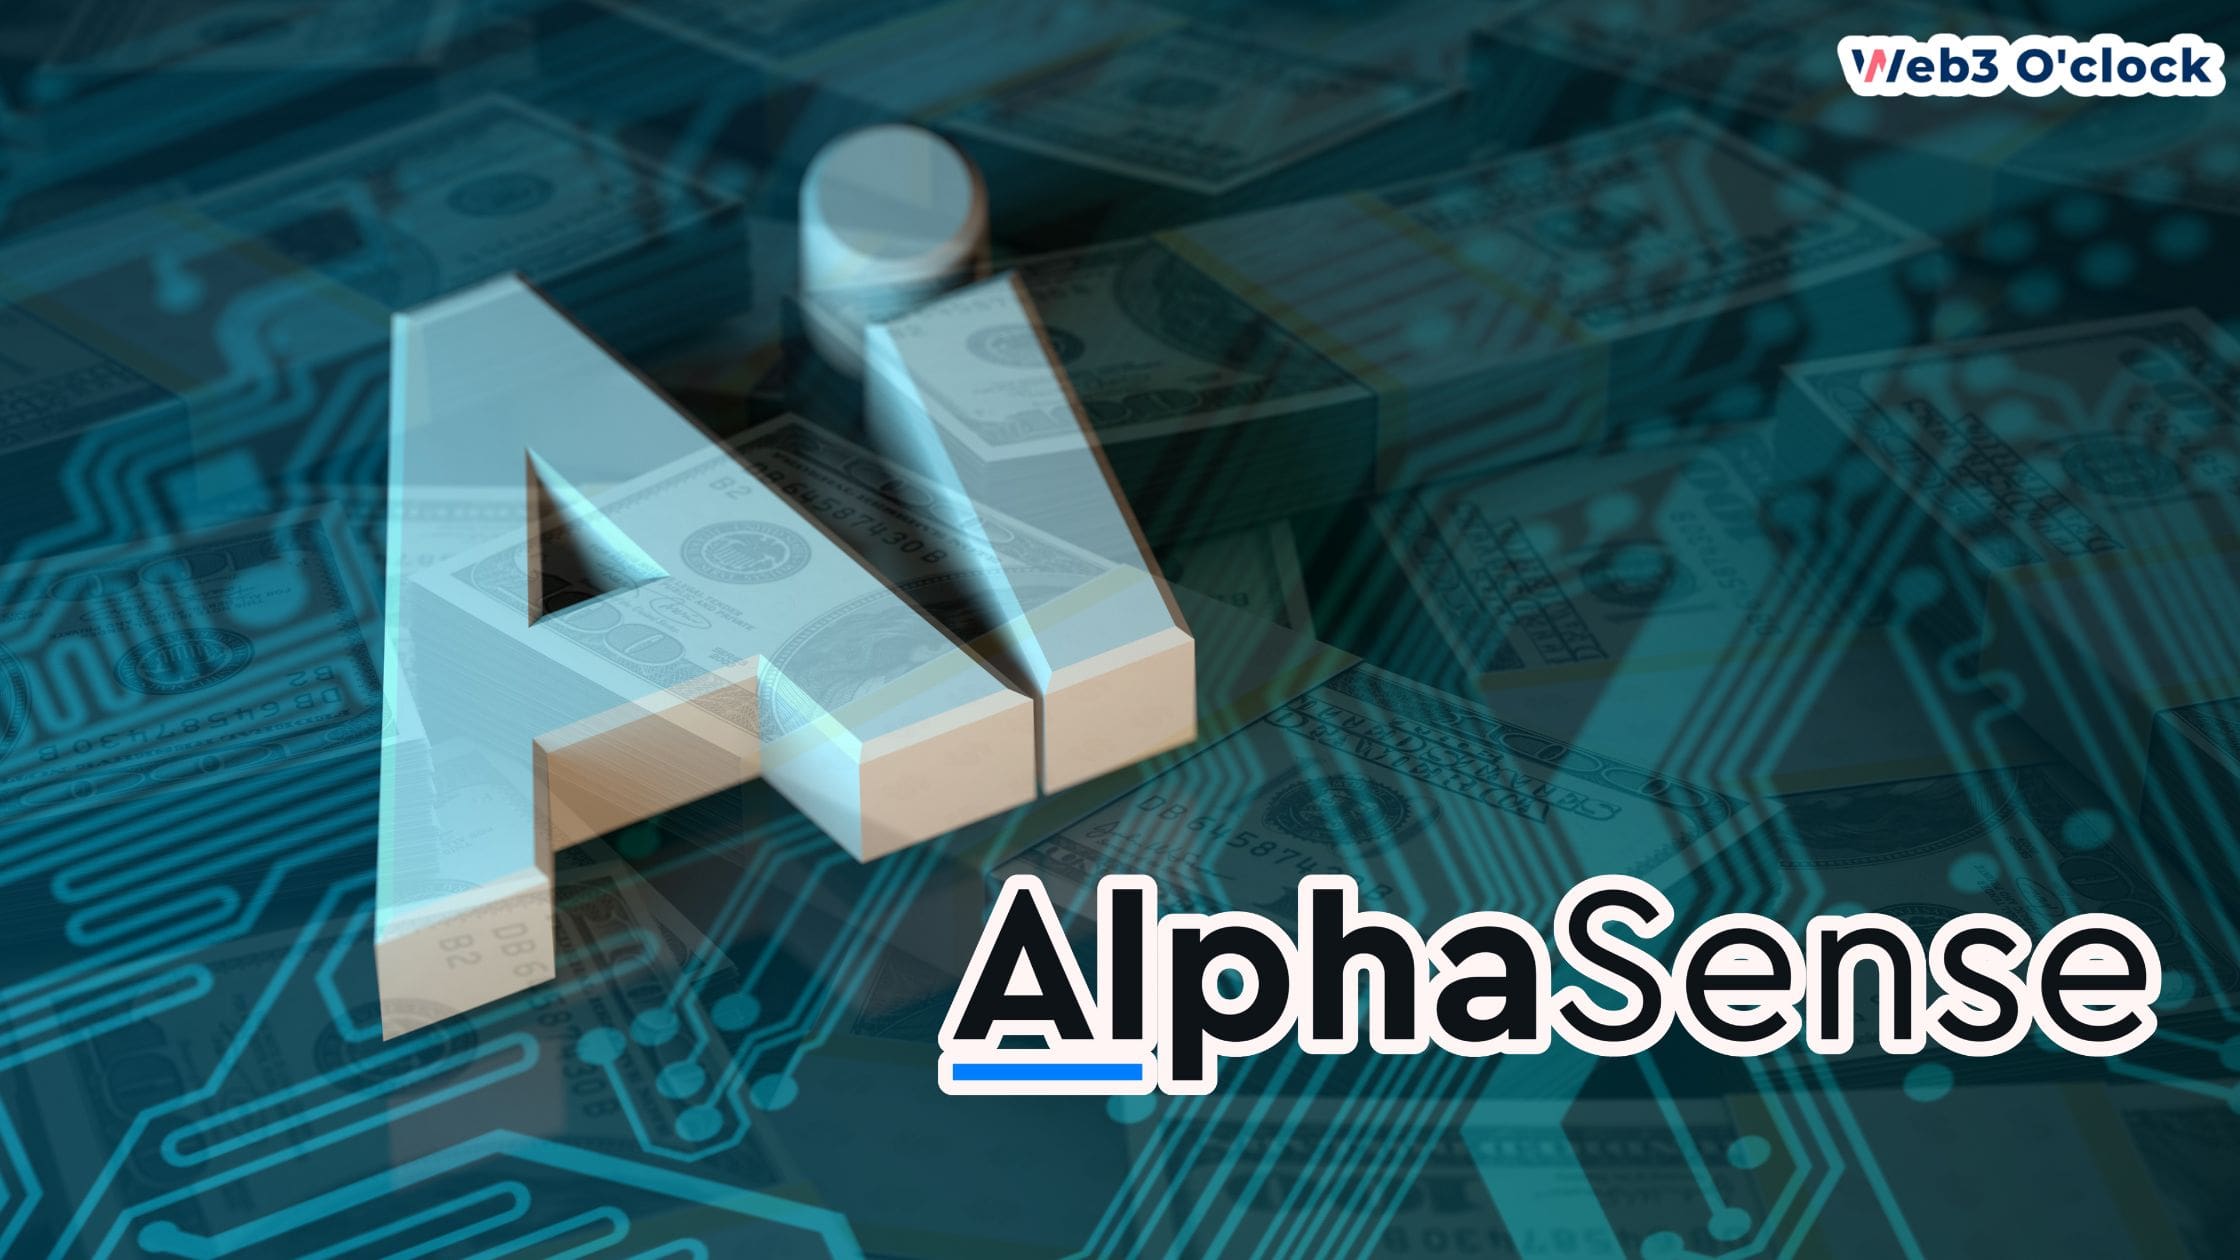 AlphaSense Raises $150 Million by web3oclock